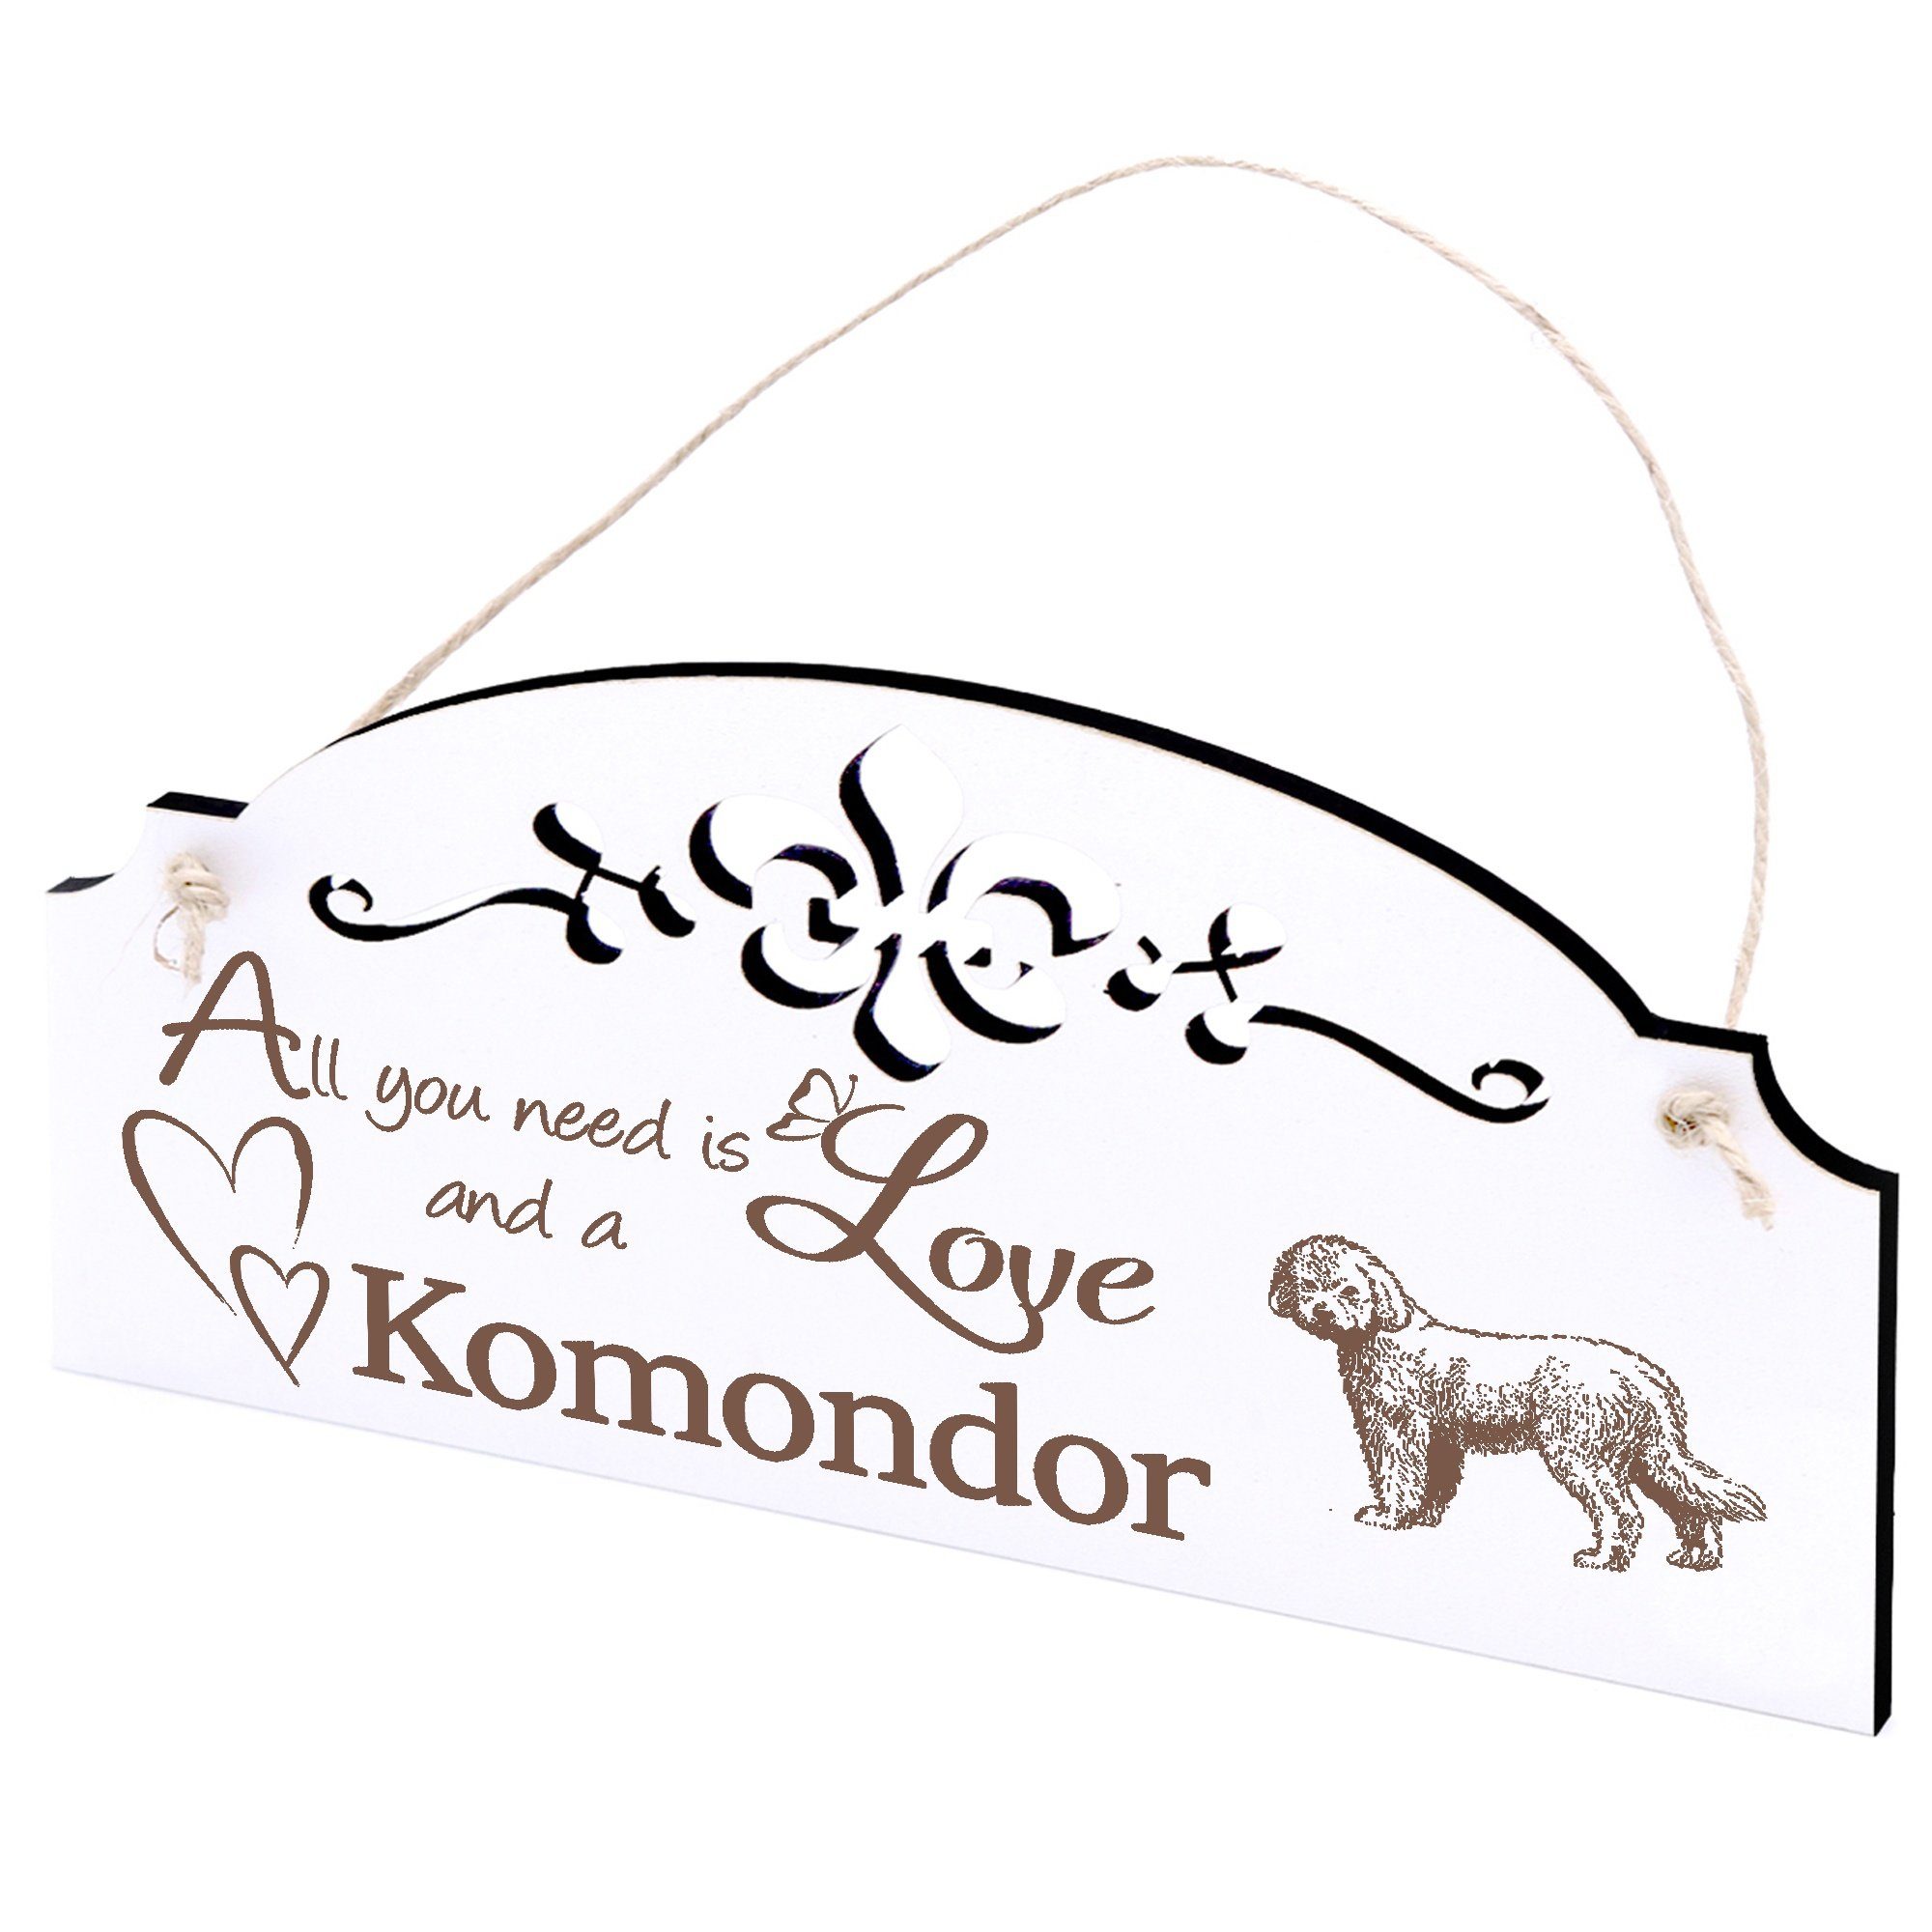 Deko Love you Komondor is Dekolando 20x10cm Hängedekoration need All